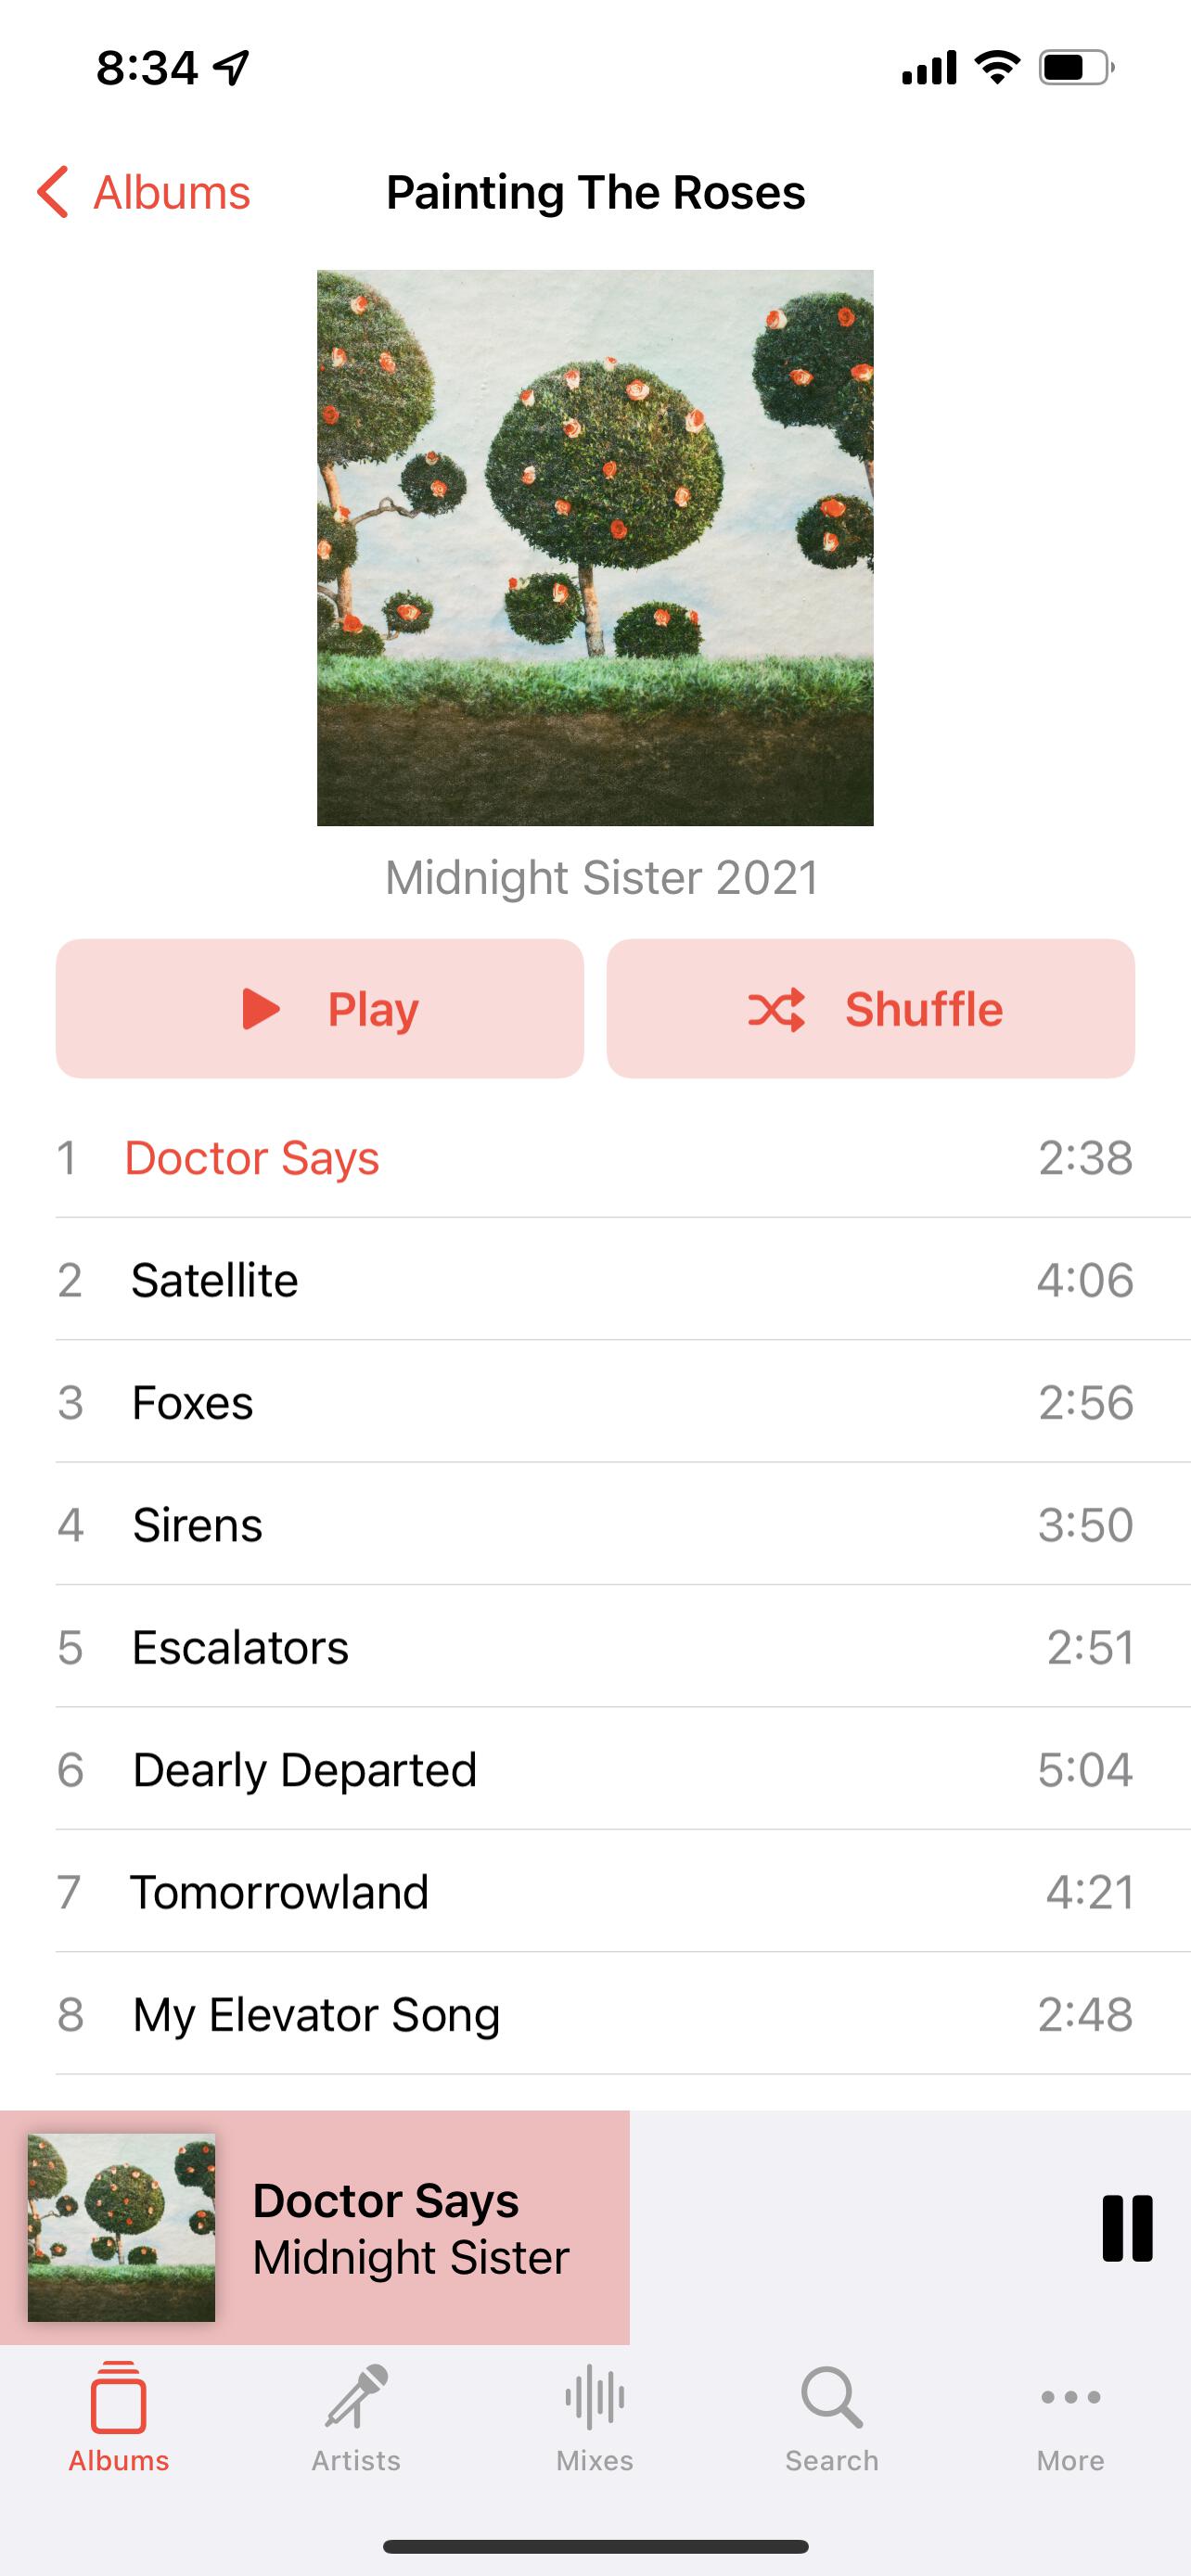 Image of Mixtapes' light theme album view